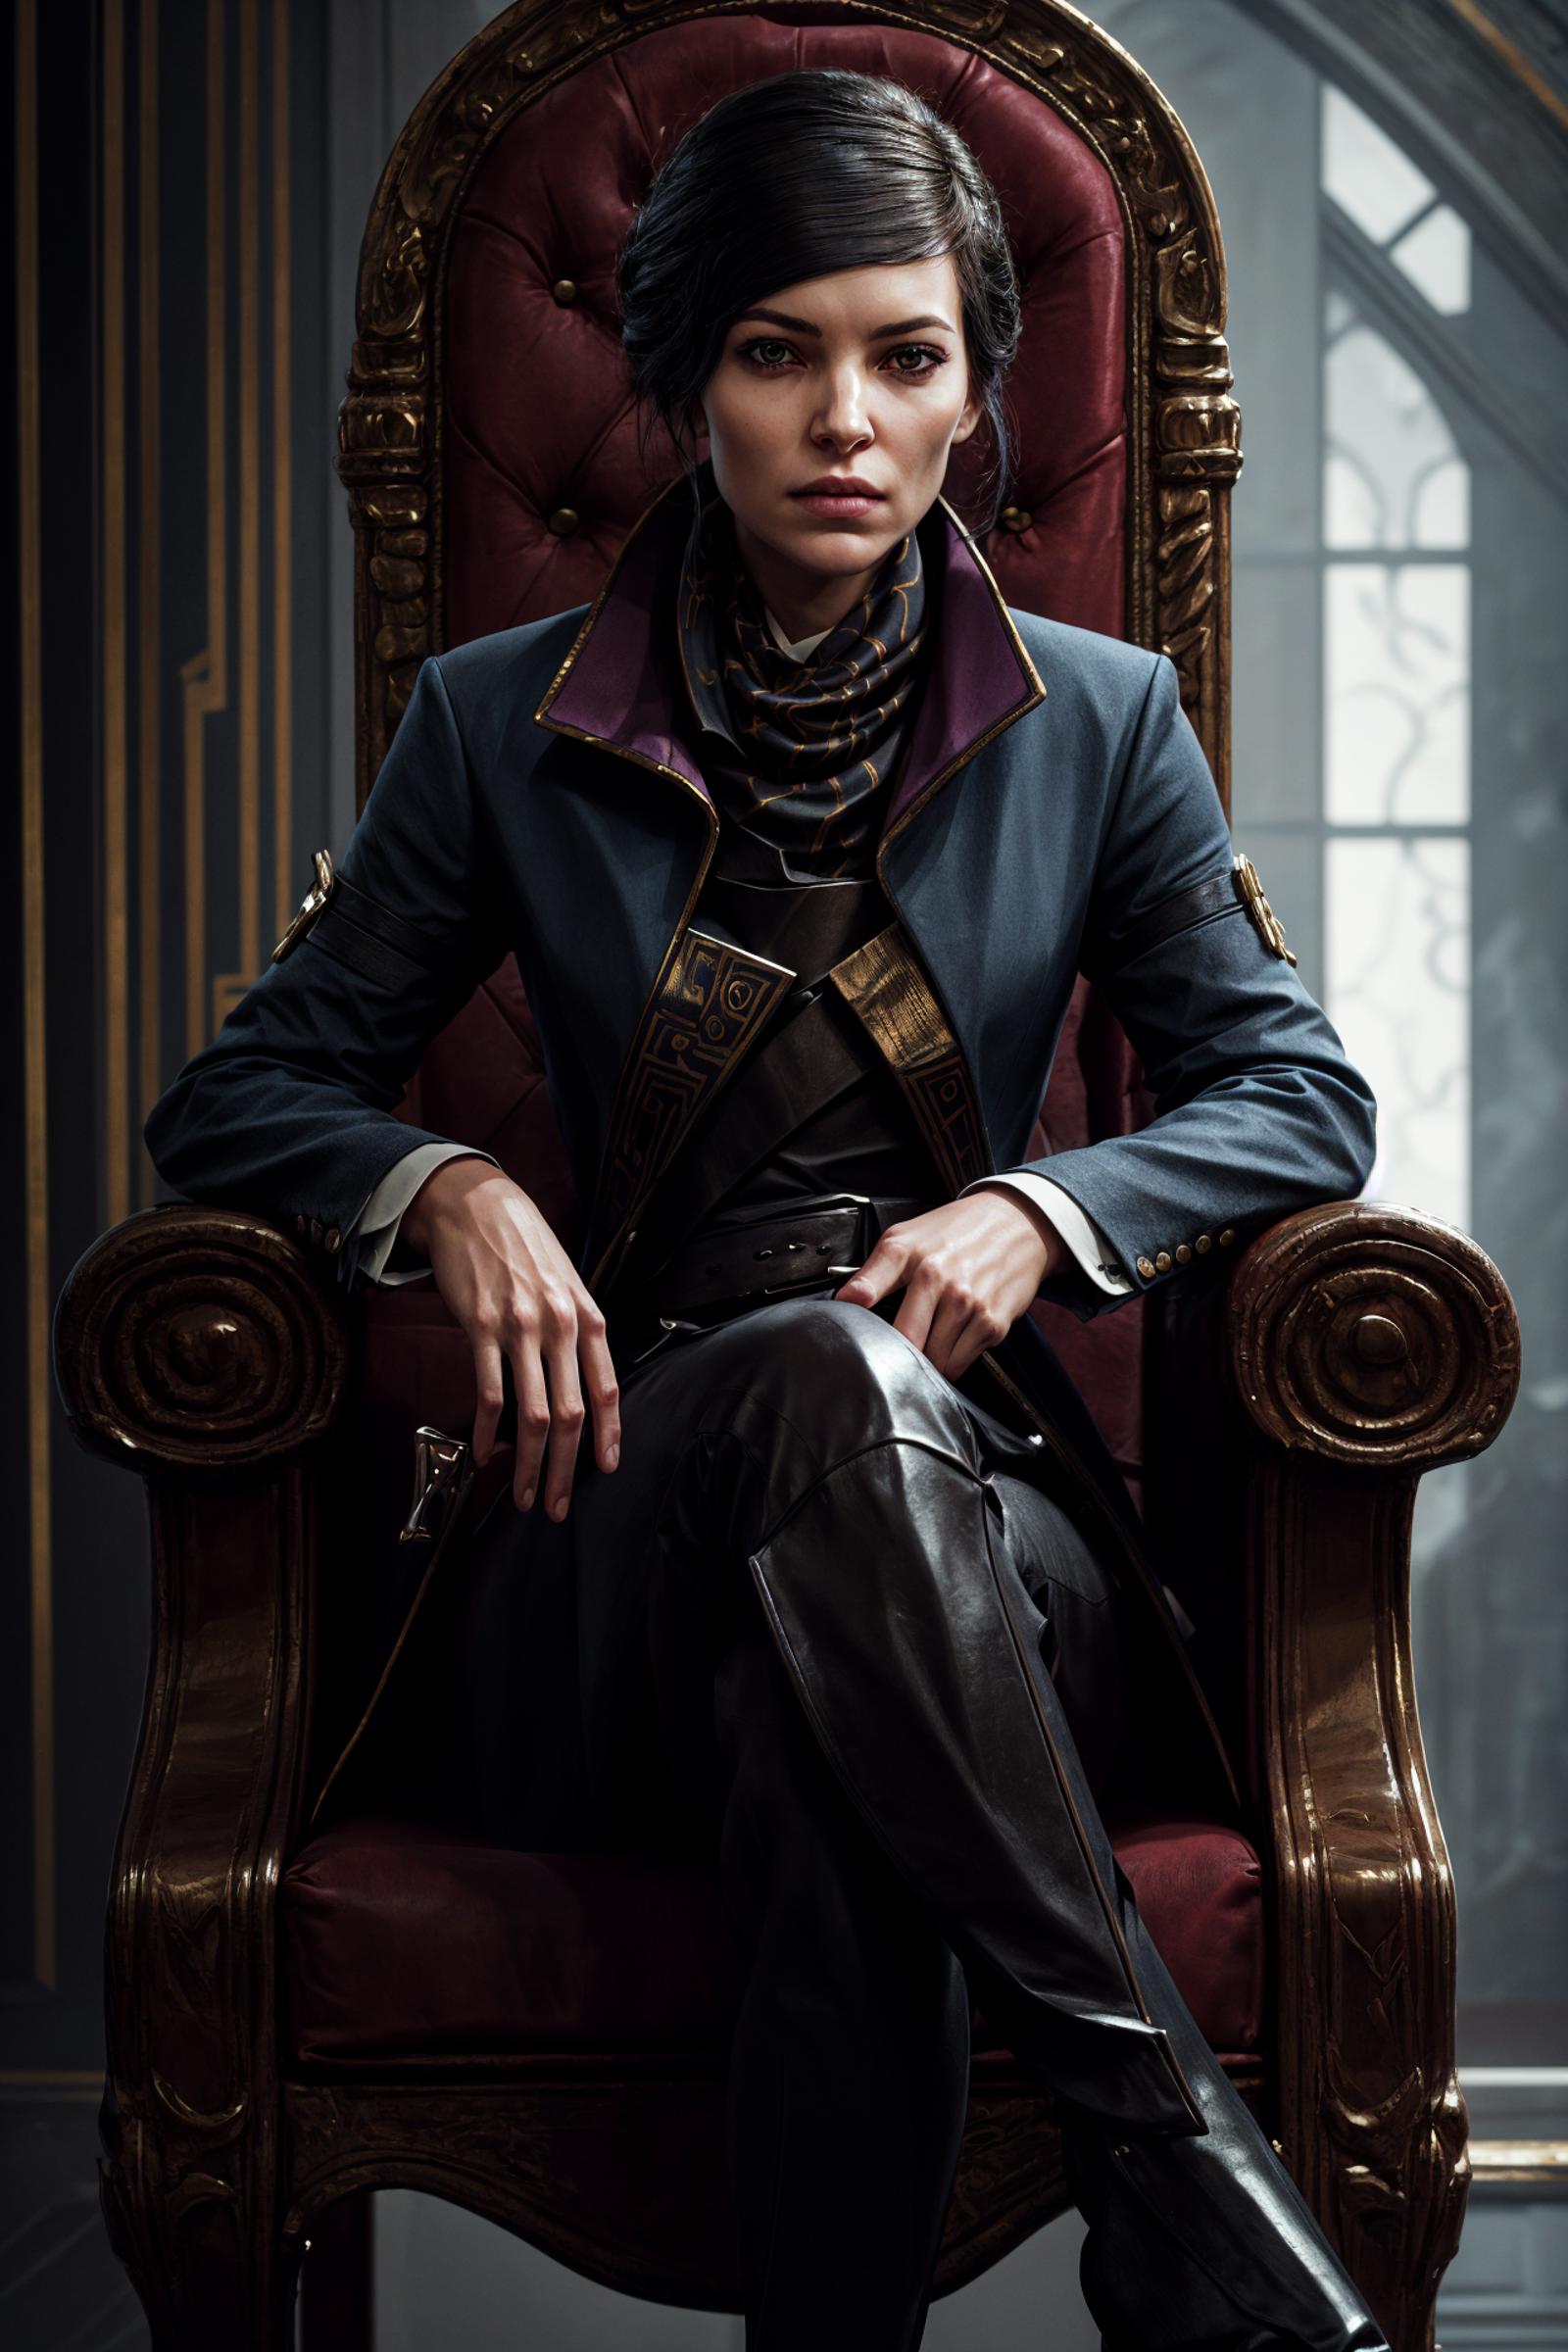 Emily Kaldwin - Dishonored 2 - Character LORA image by richardphantom0270